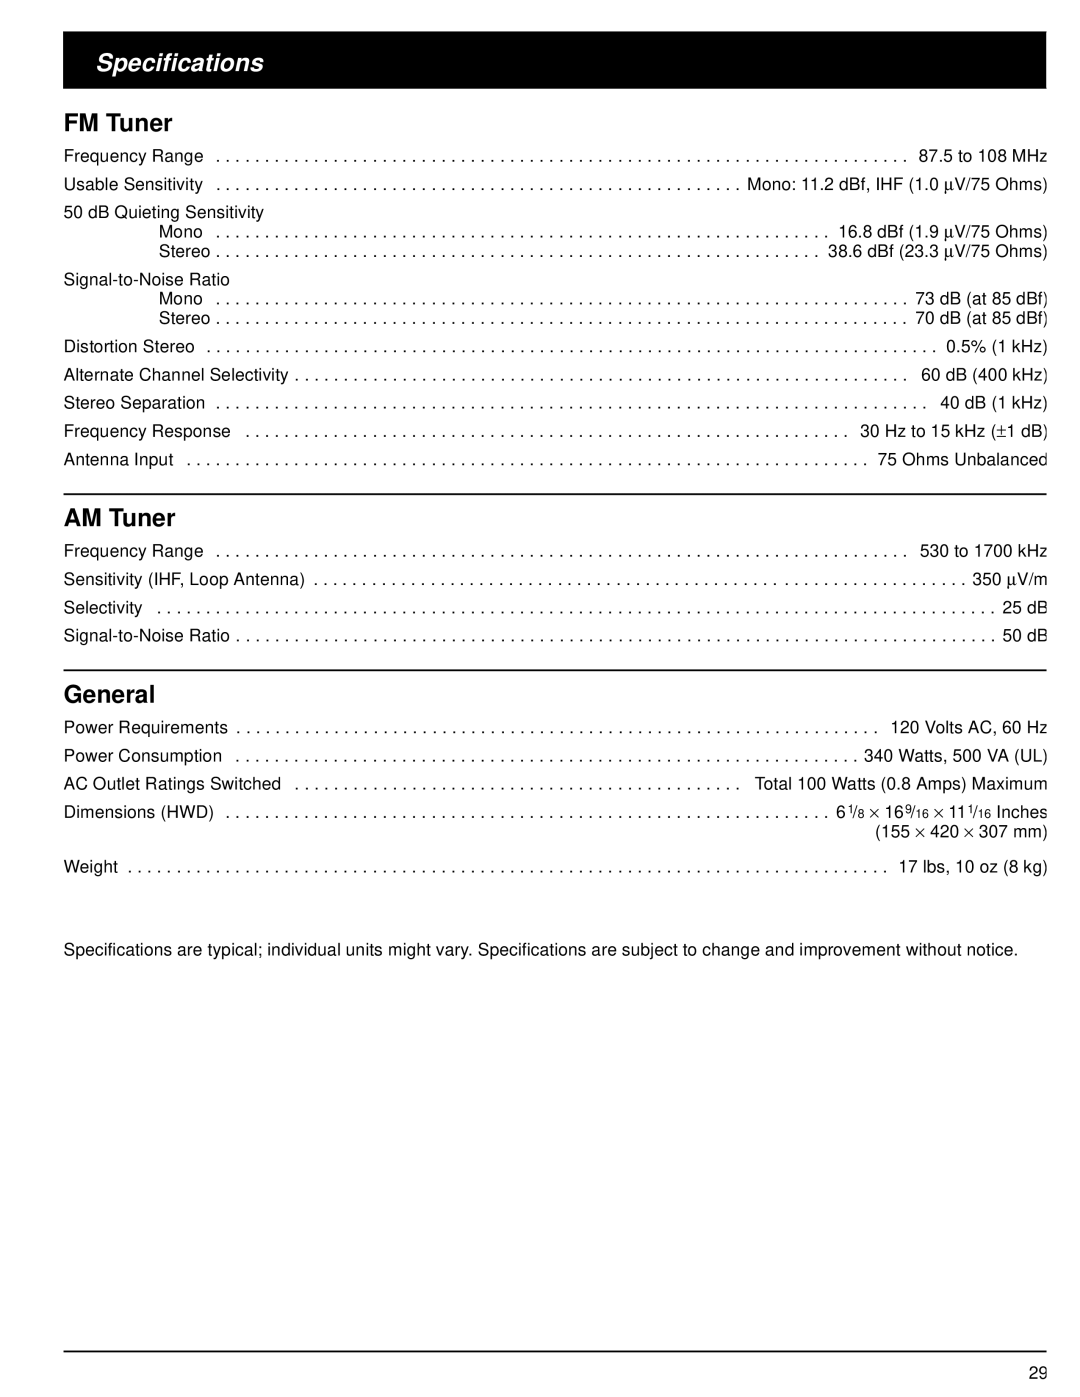 Optimus STAV-3580 owner manual Specifications, FM Tuner, AM Tuner, General 